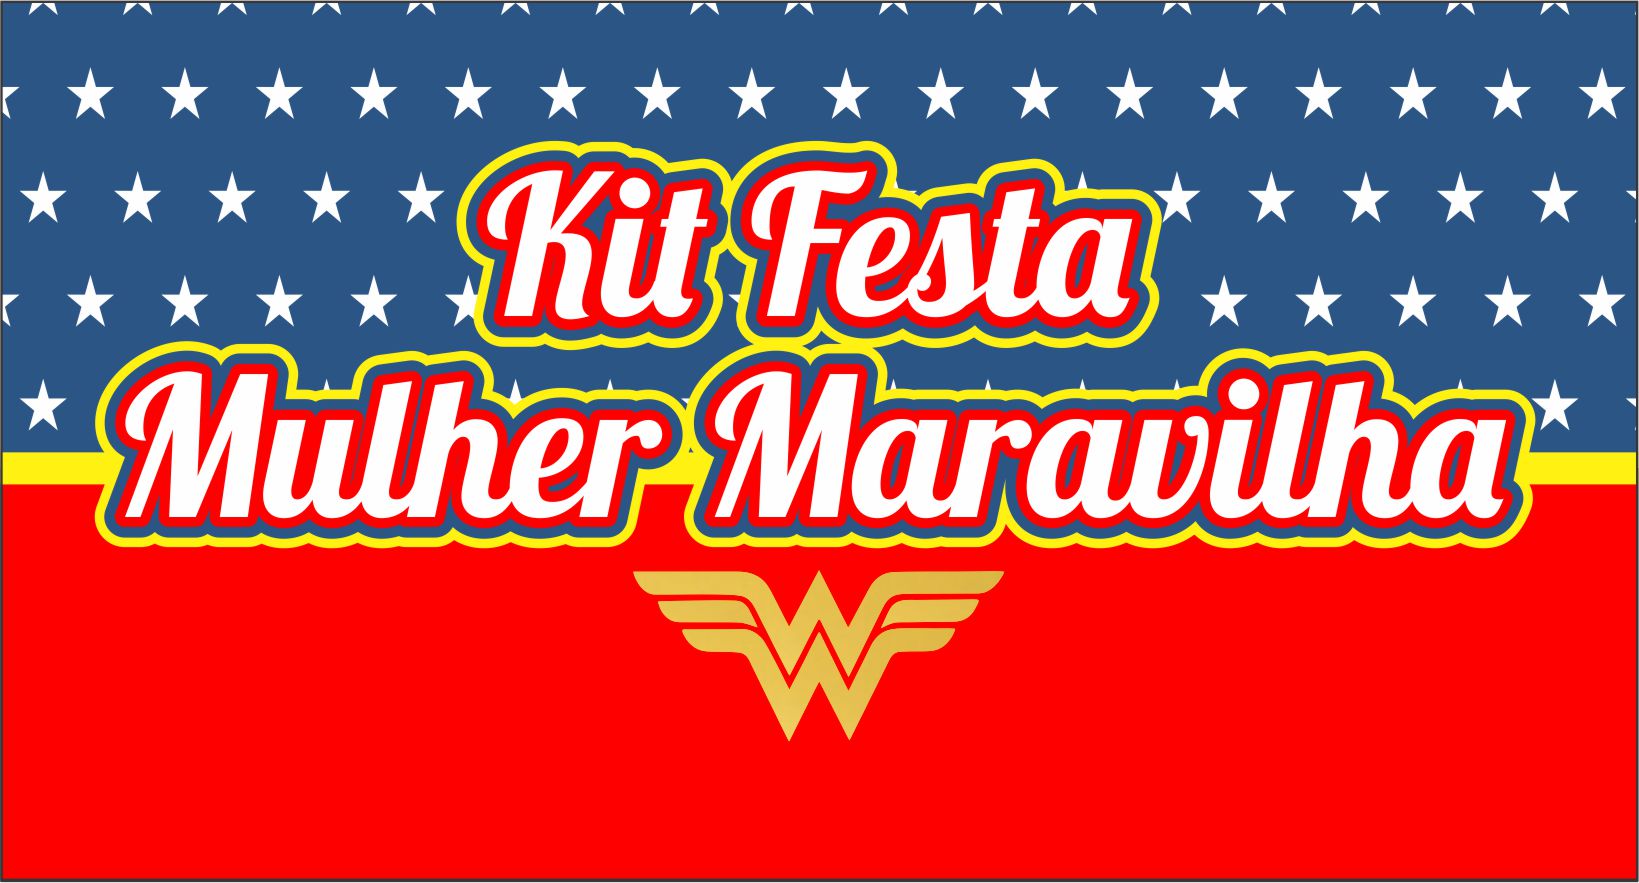 CAPA KIT FESTA MULHER MARAVILHA COMPLETO - Kit Festa Mulher Maravilha Completo Totalmente Gratuito